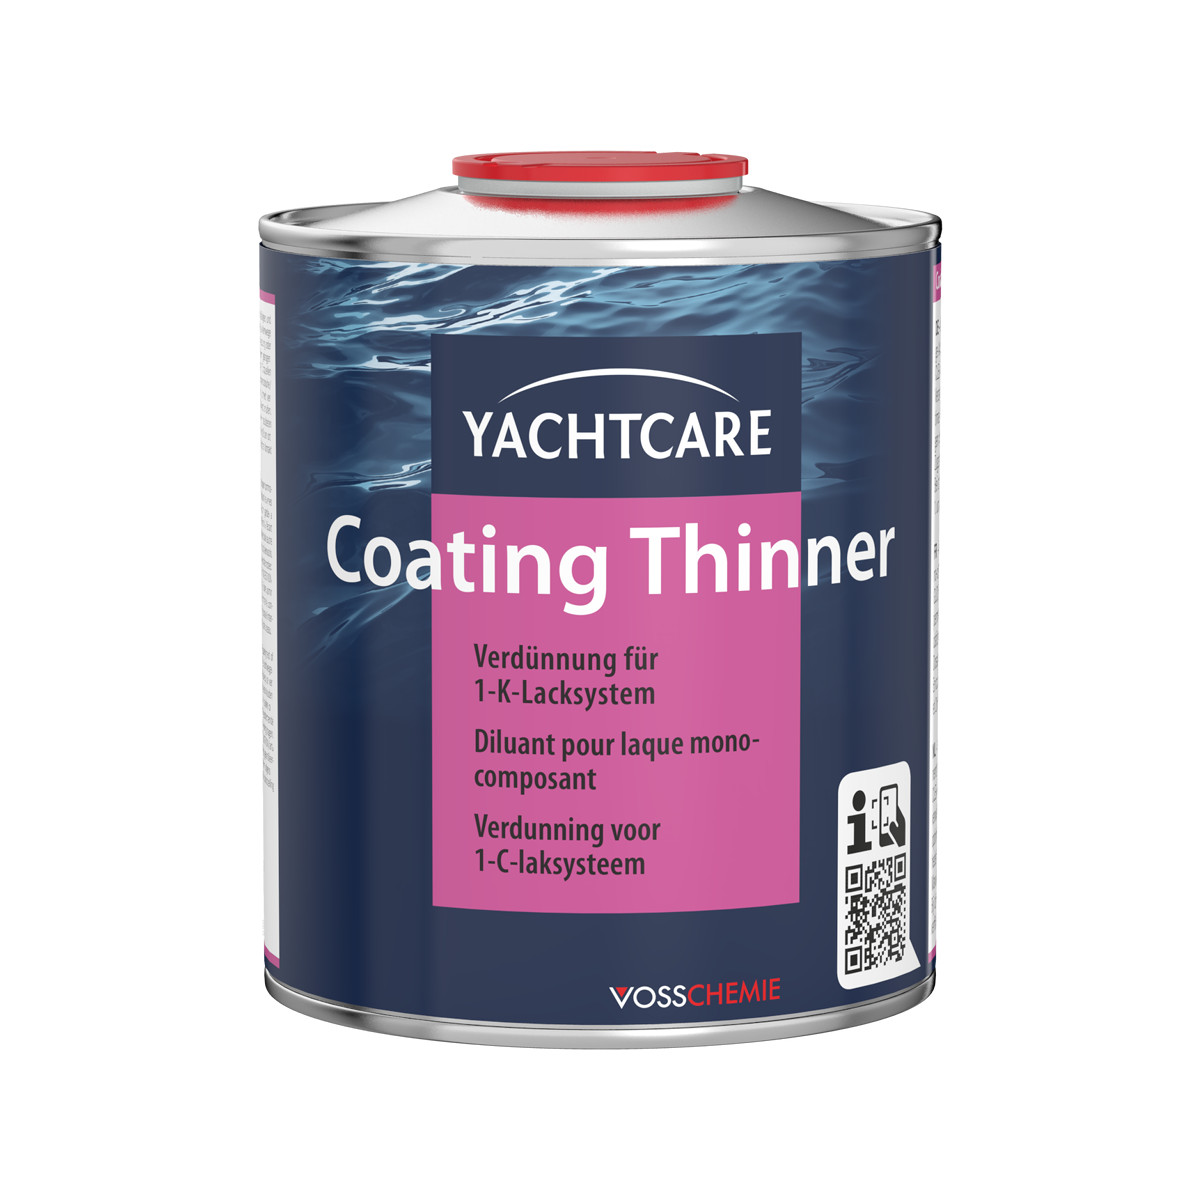 Yachtcare Coating Thinner verdunning voor 1-C-laksysteem